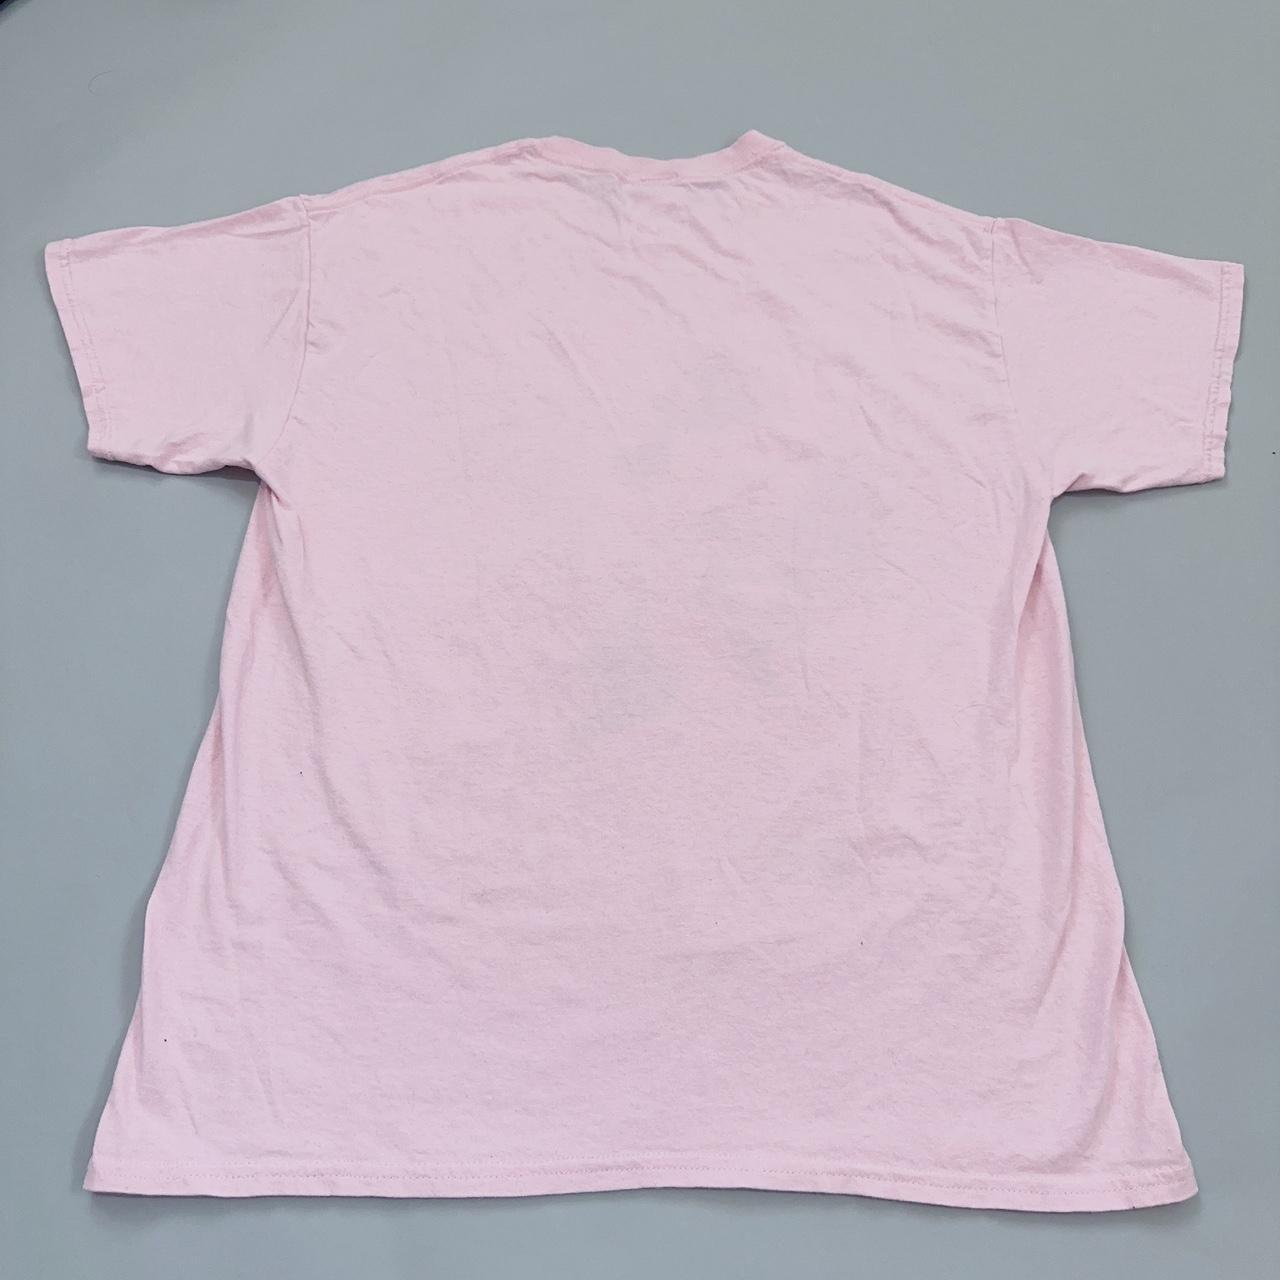 OMOCAT Men's Pink and White T-shirt (4)